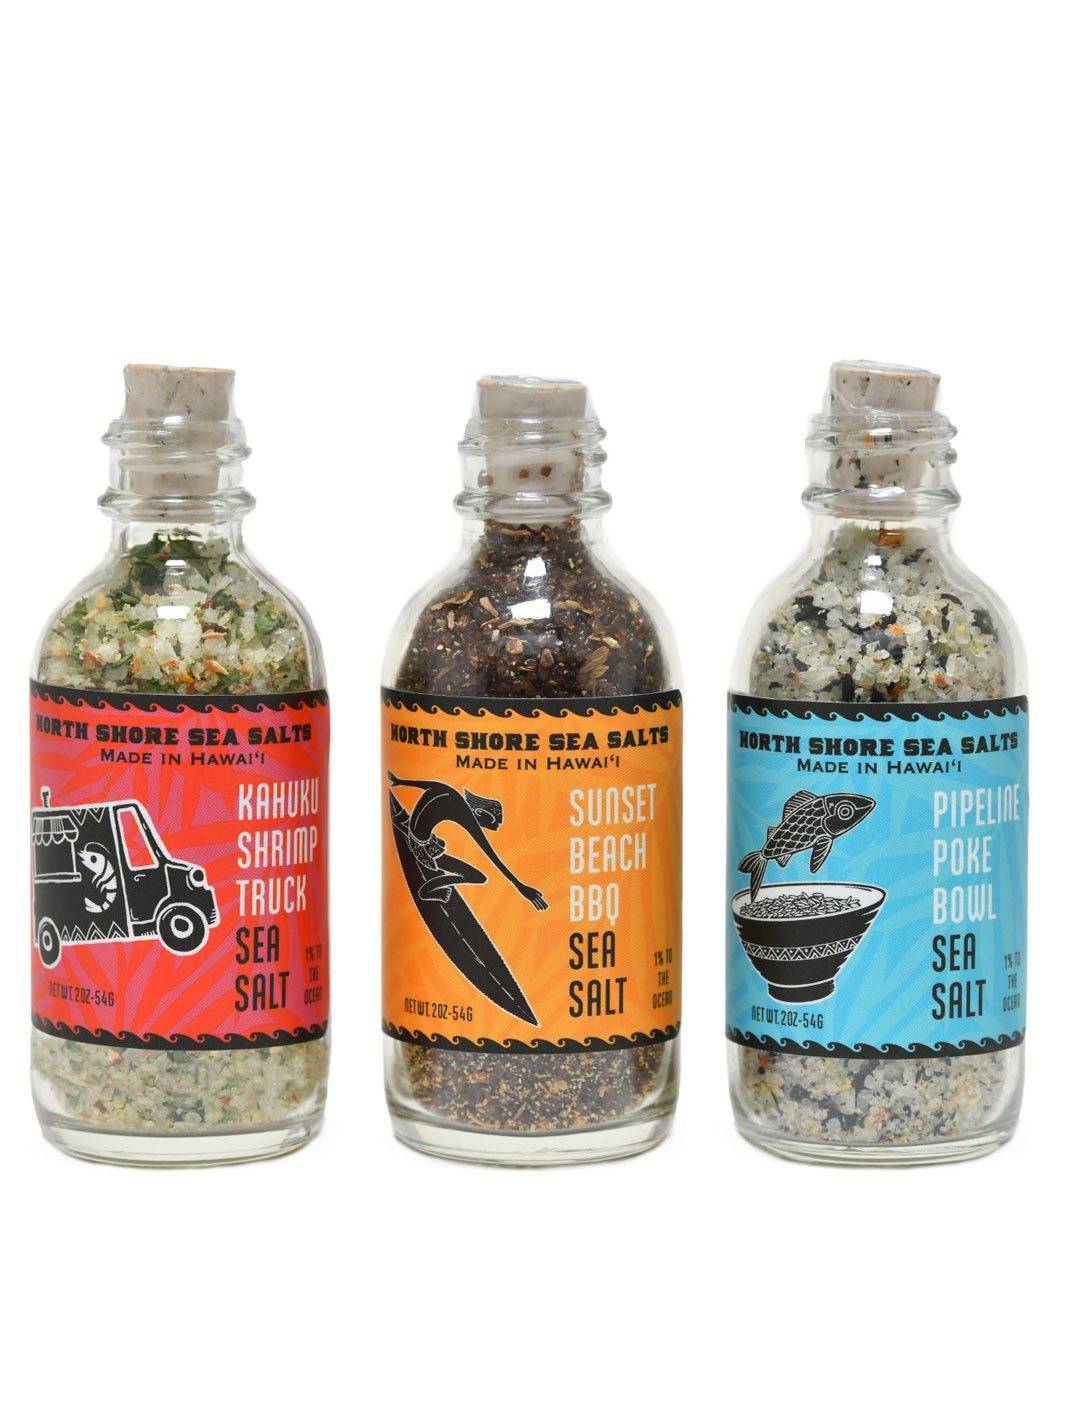 Pop-Up Mākeke - Sea Salts of Hawaii - North Shore Hawaiian Sea Salt Sampler Box - Sample Bottles